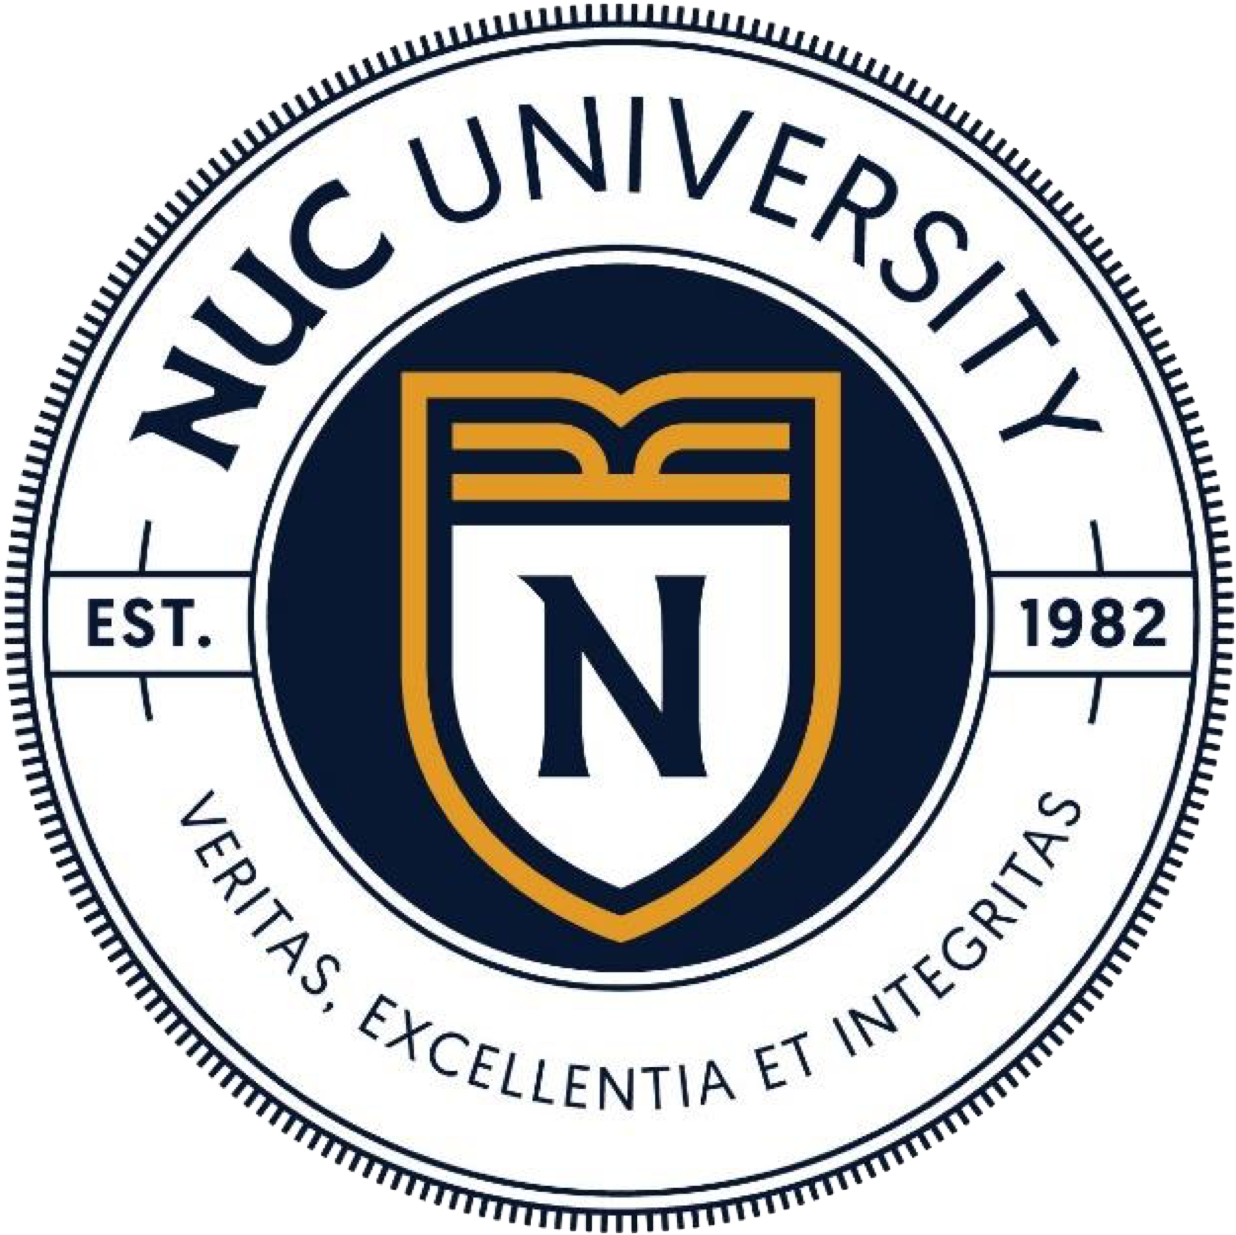 NUC University logo